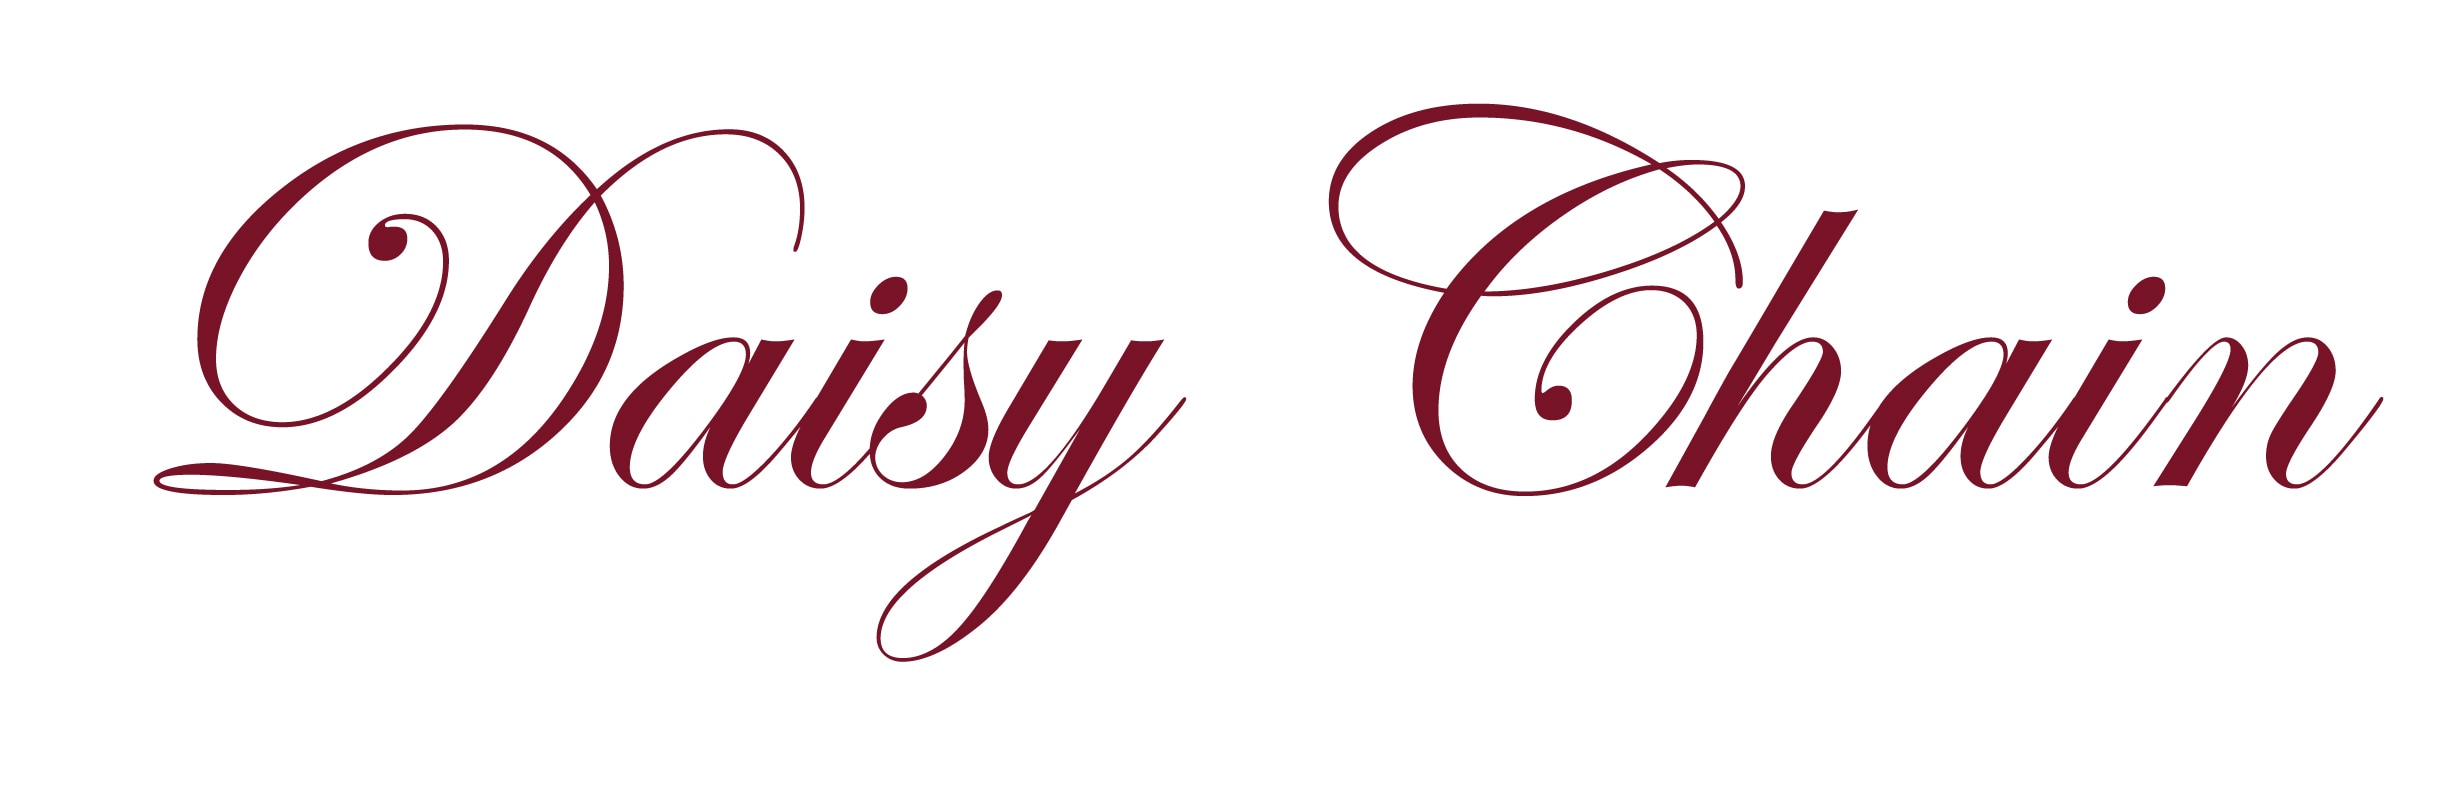 Daisy Chain Willesden - Logo